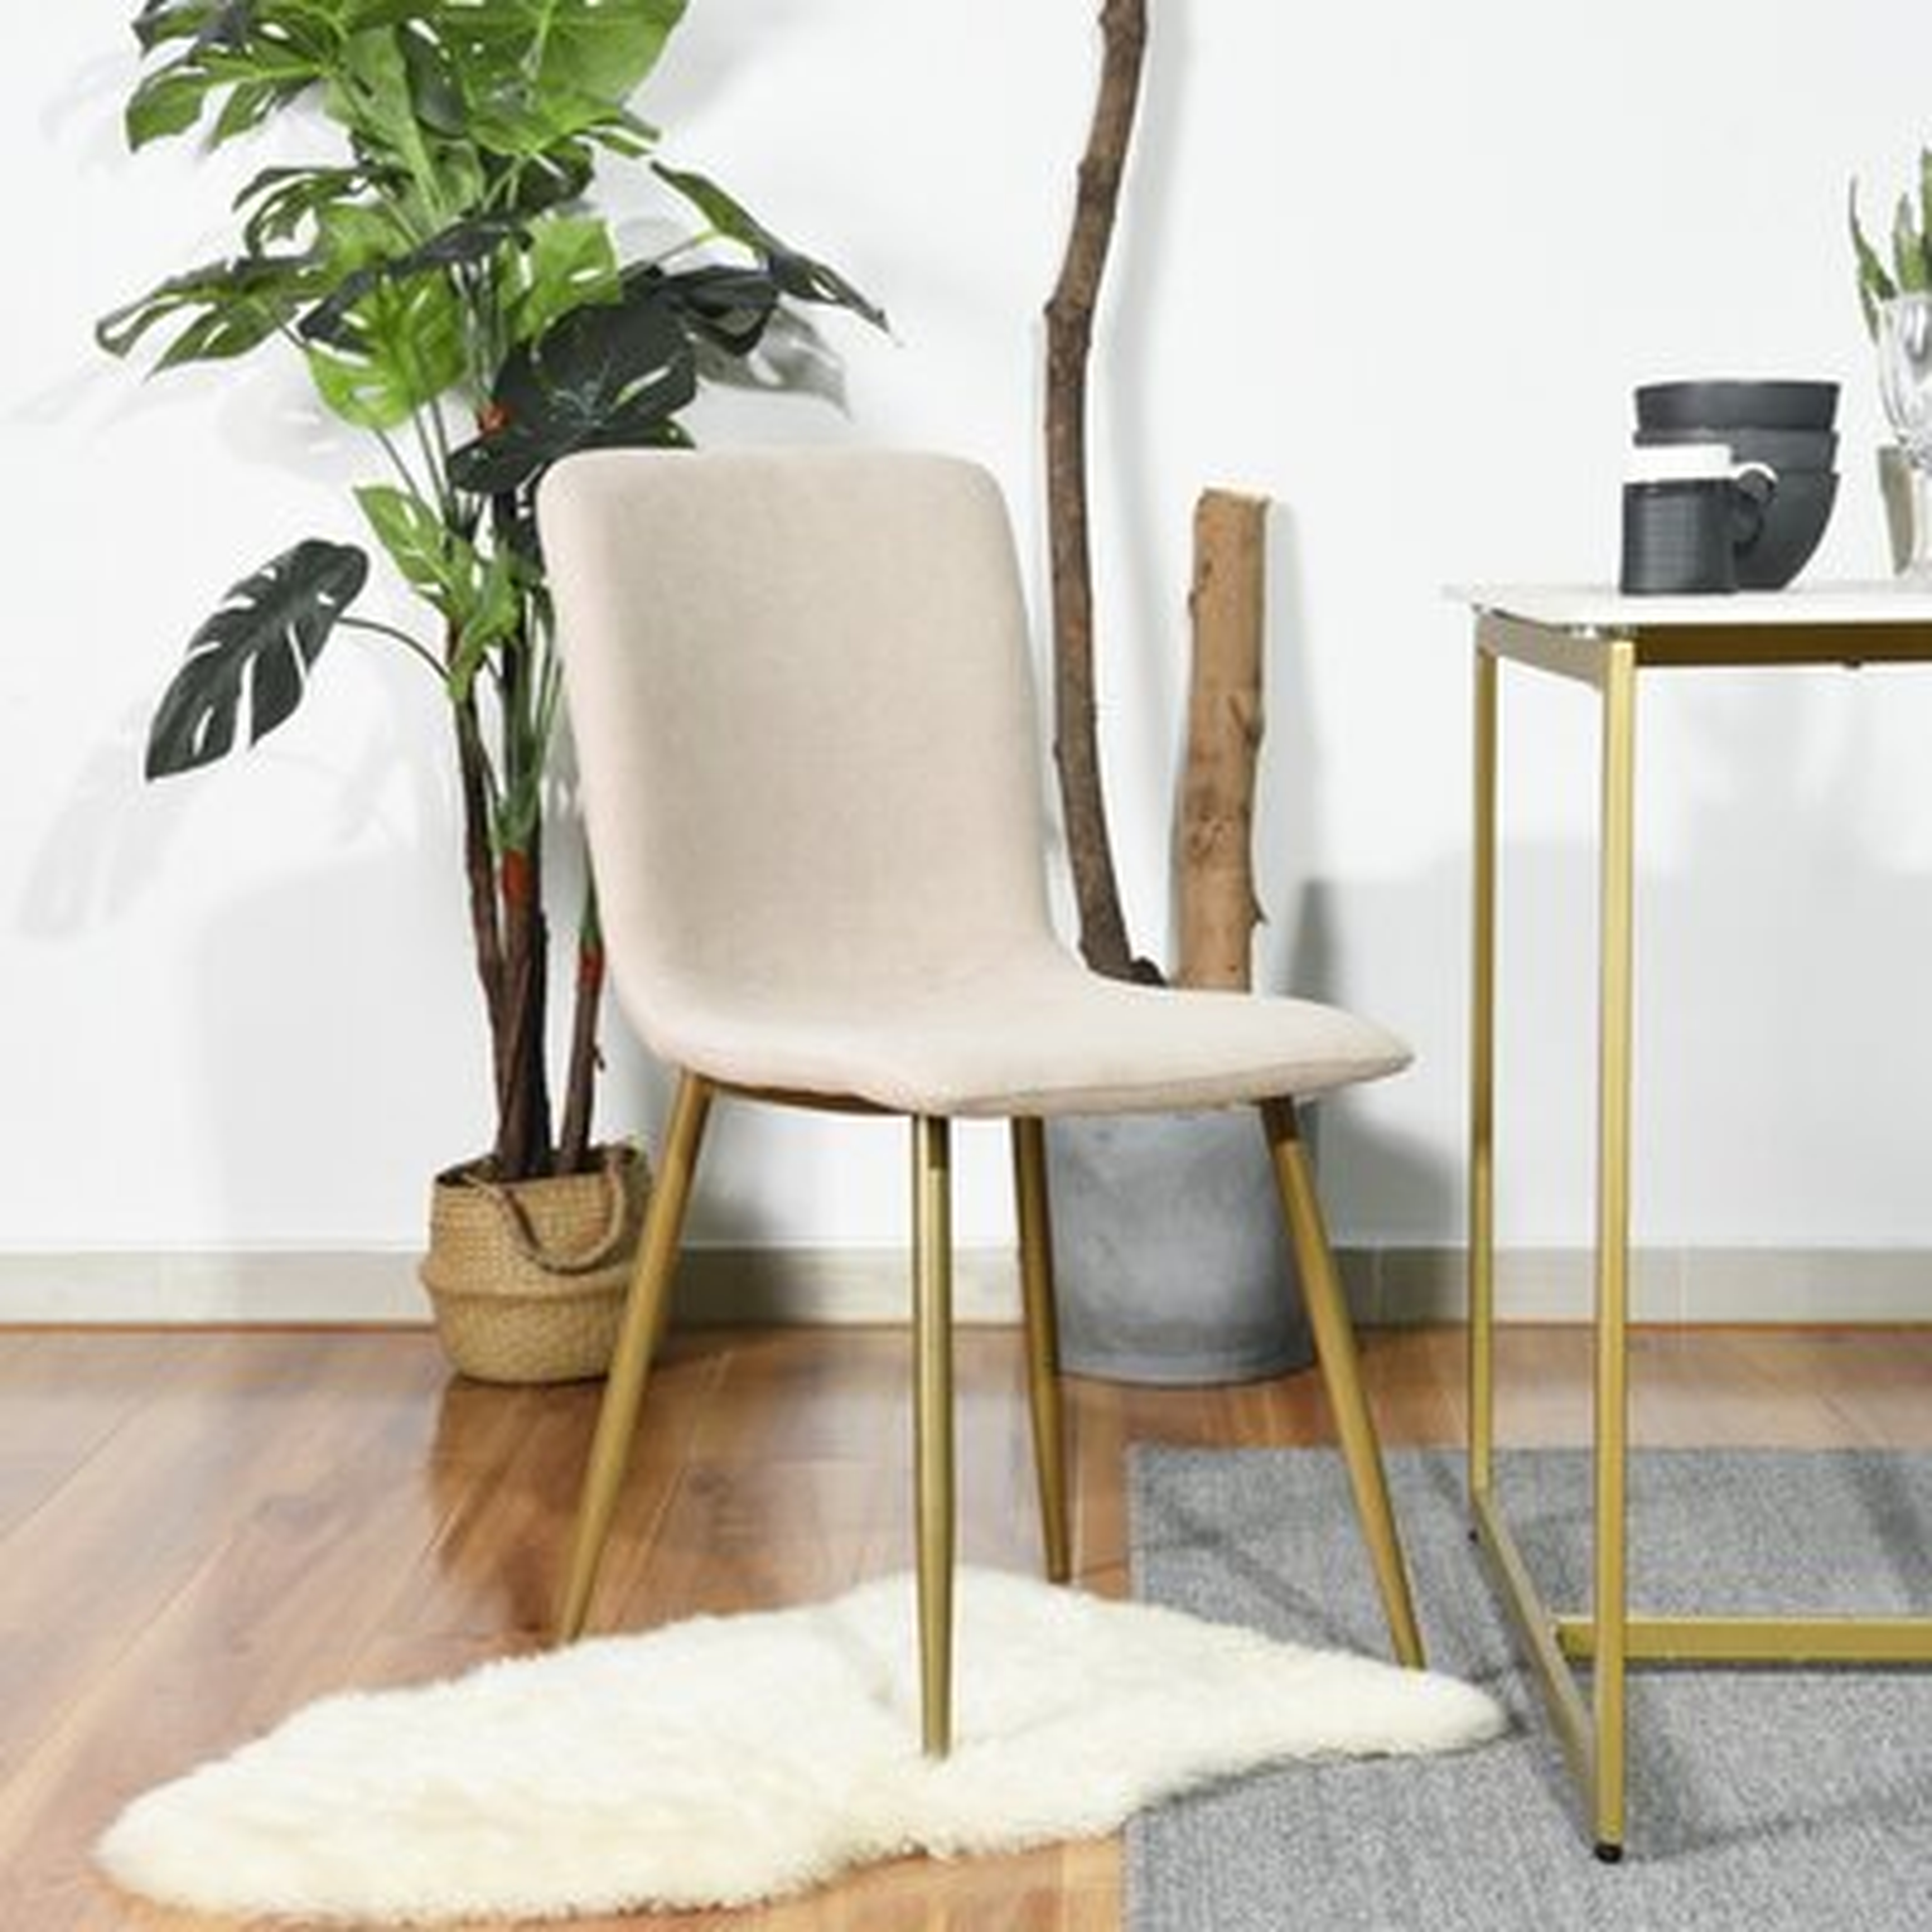 Blumberg Upholstered Side Chair (Set of 4) - Wayfair